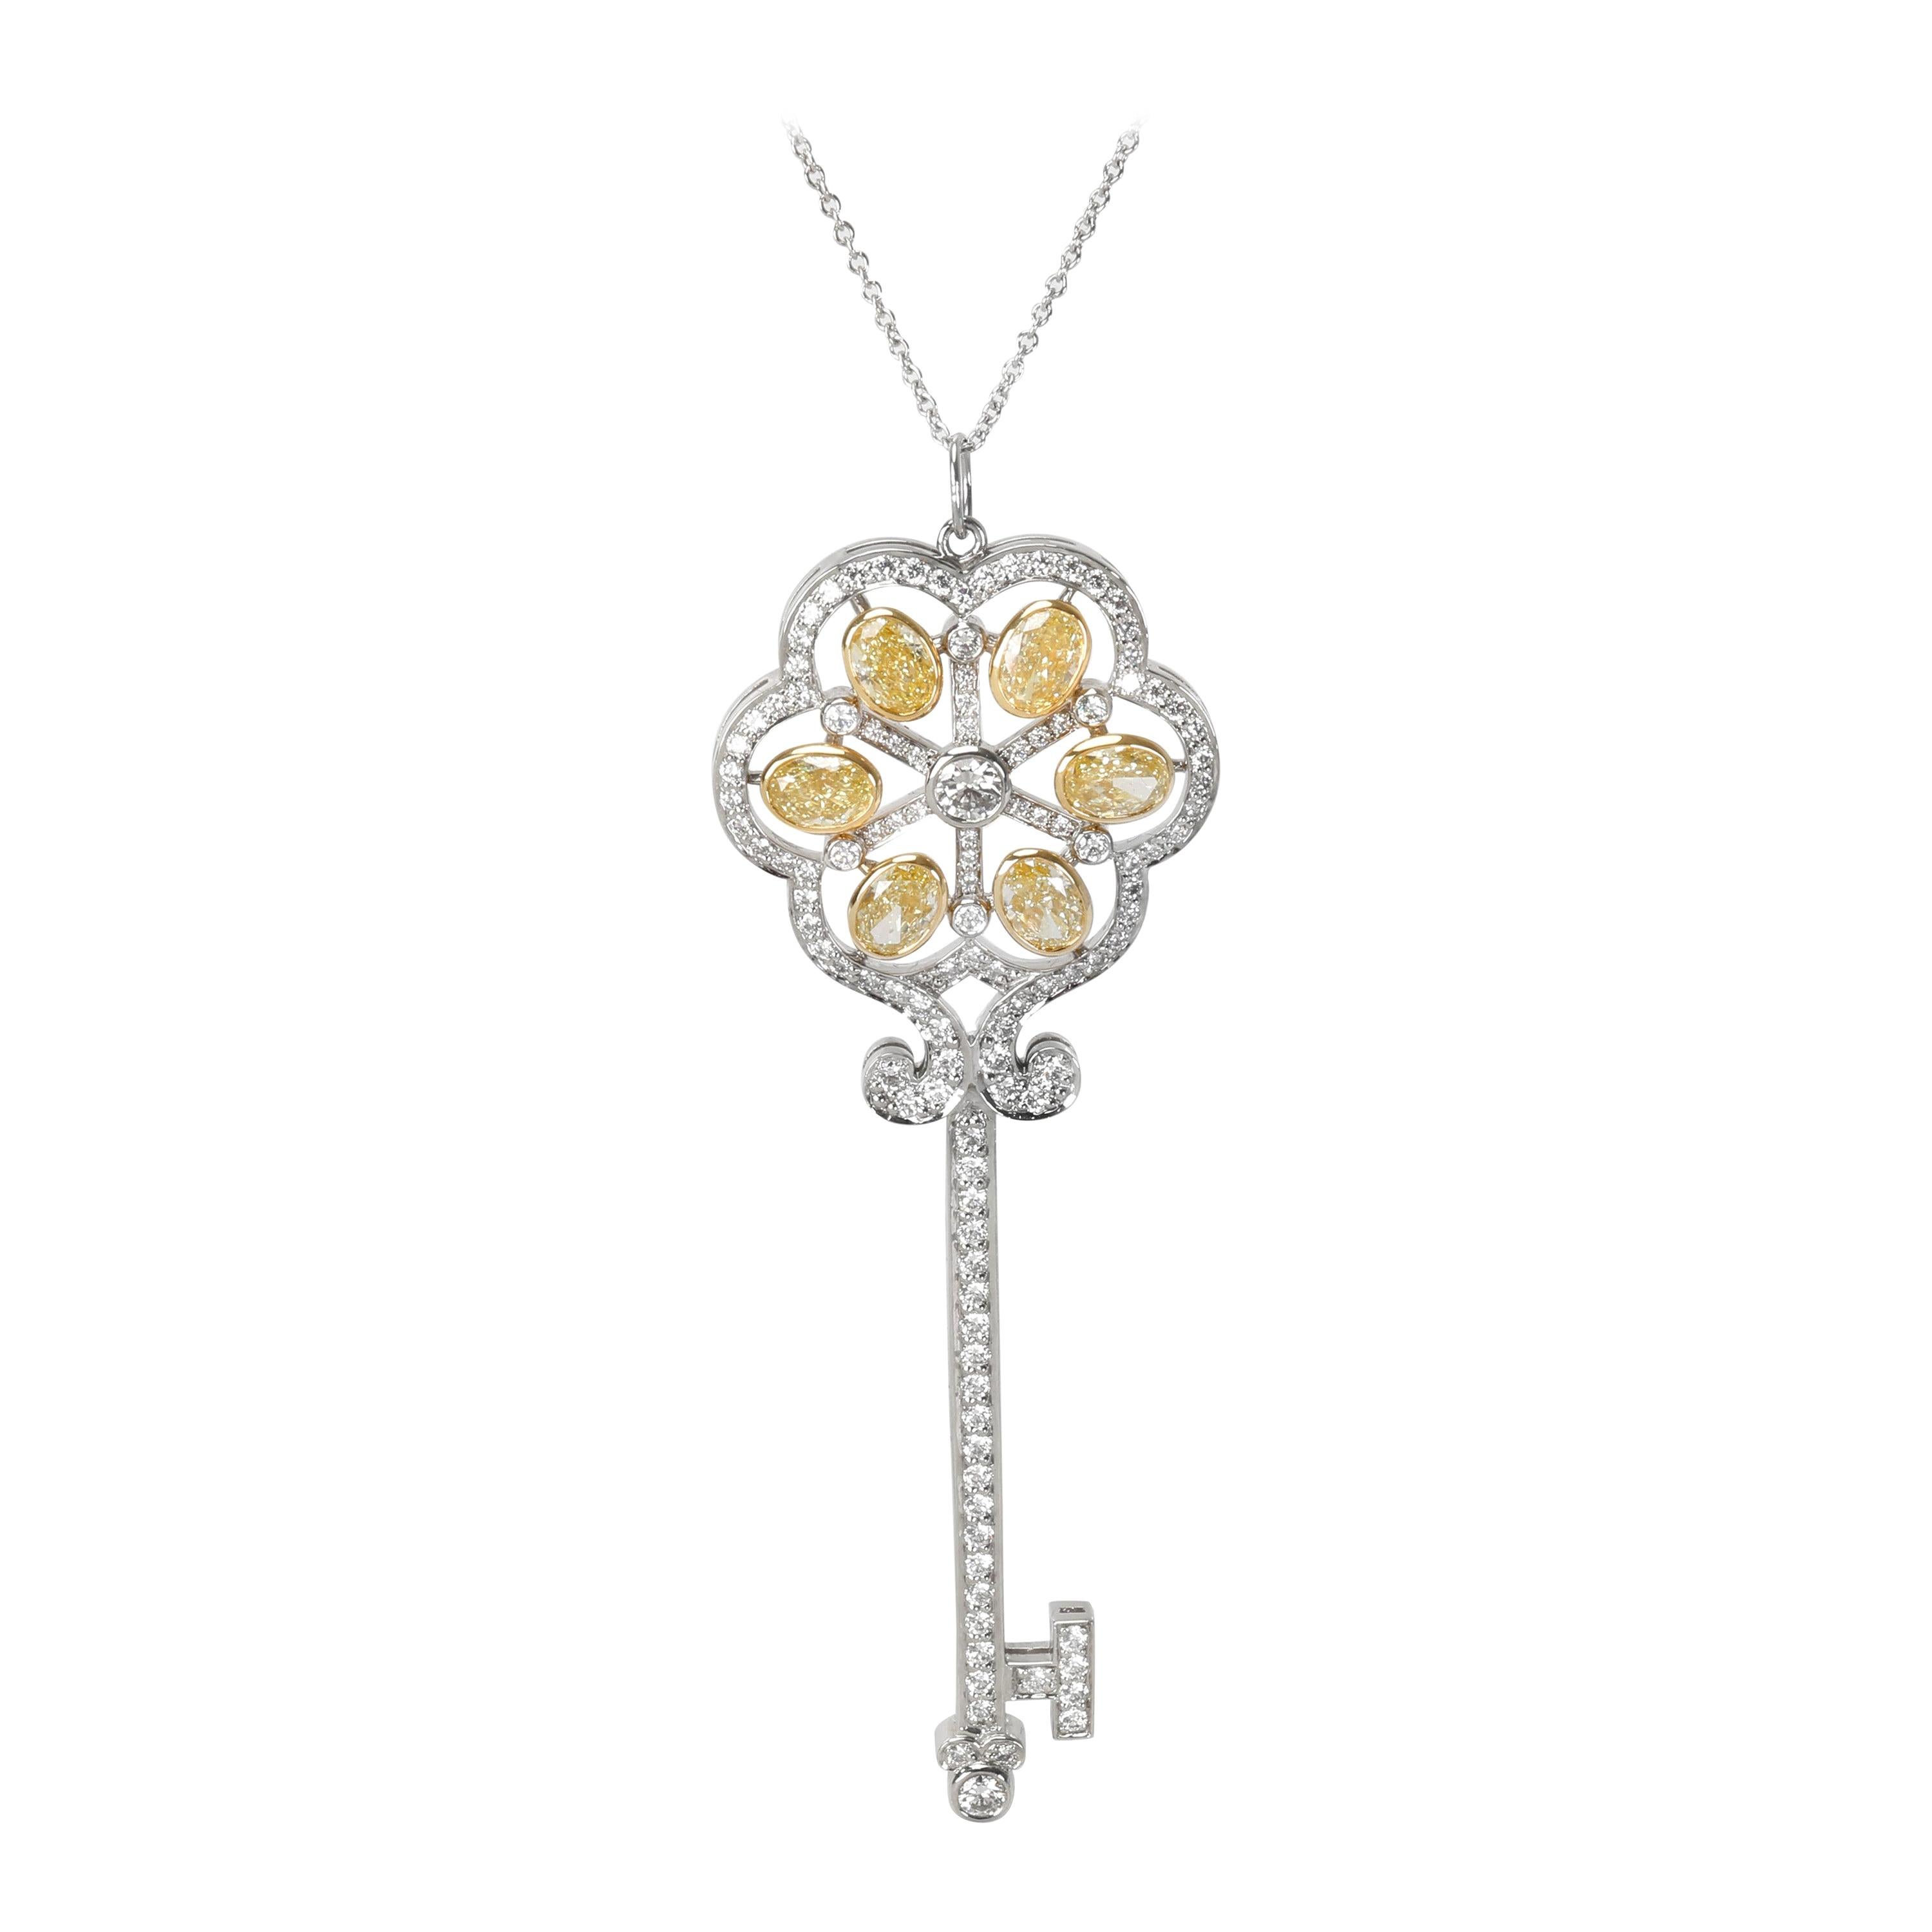 Vintage Tiffany and Co. Diamond Key Pendant Set in 18k Yellow Gold